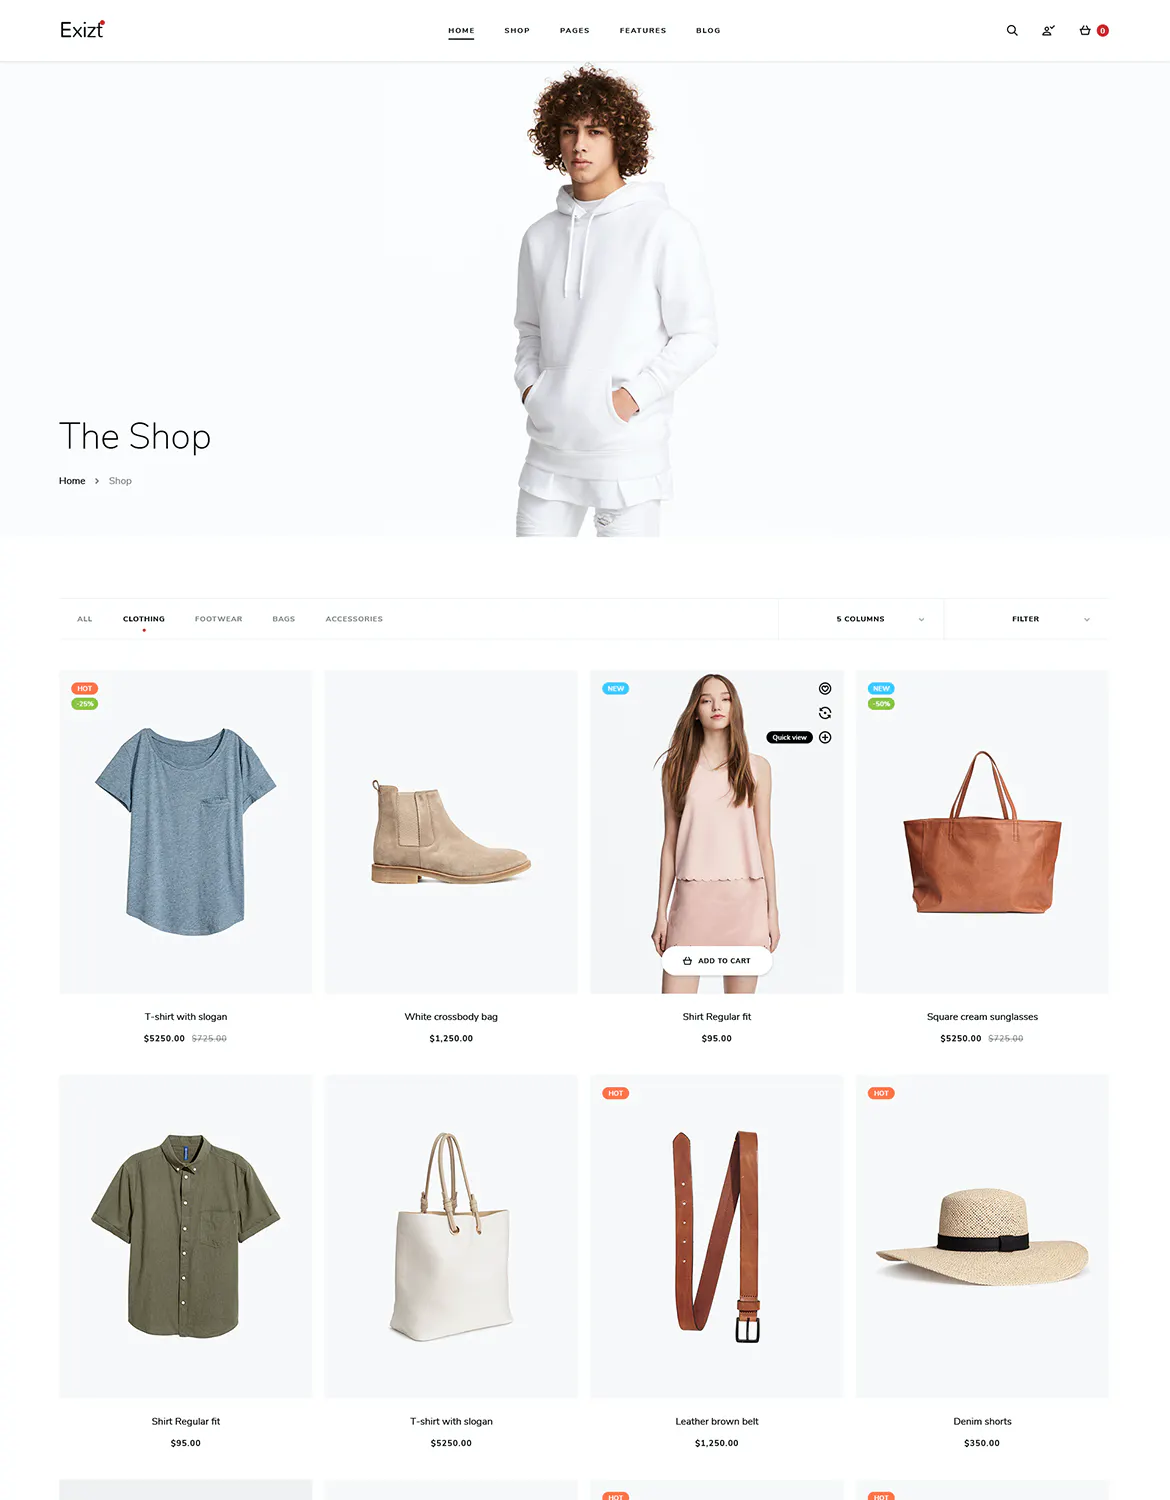 Exist - Wonderful Fashion HTML Template